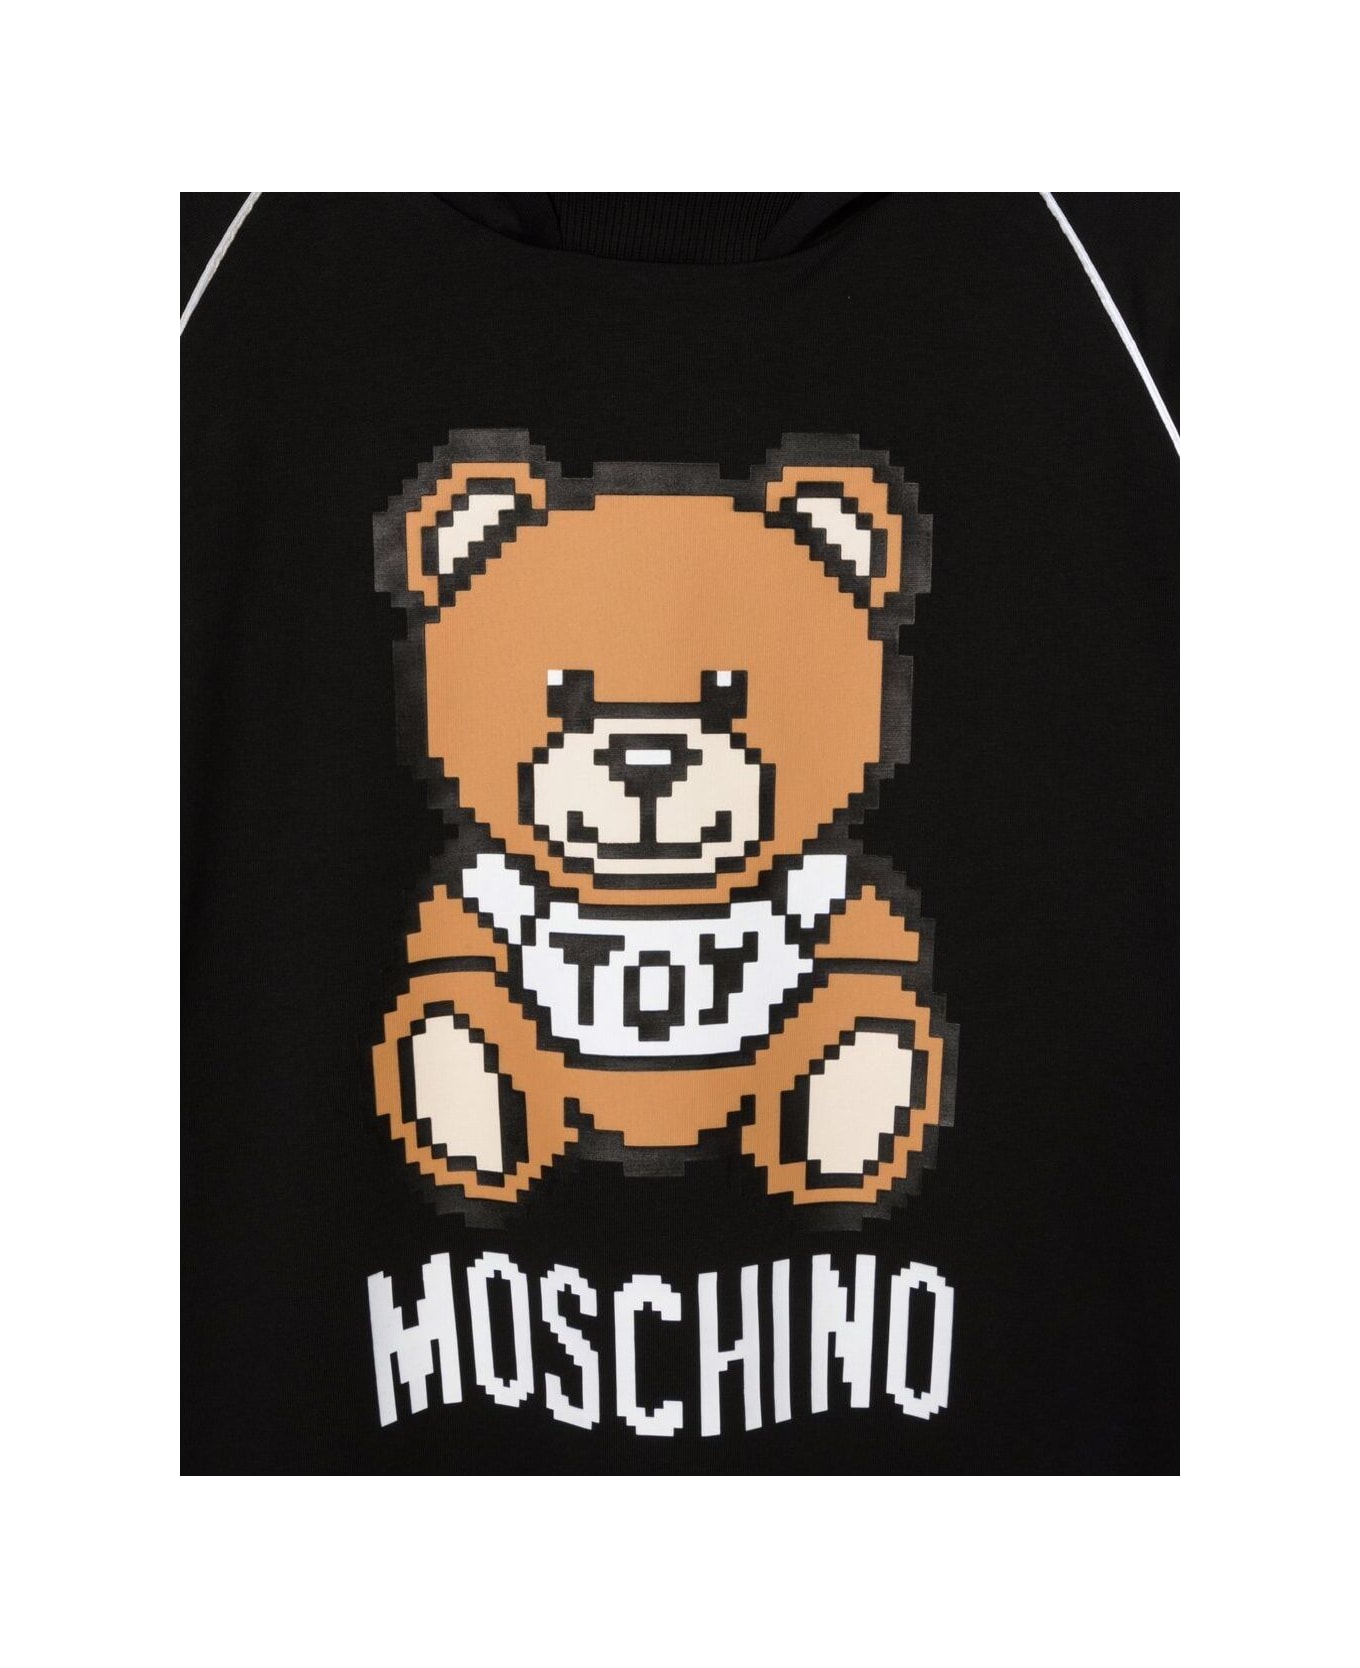 Moschino Kids Boy's Black Cotton Hoodie With Bear Print - Black